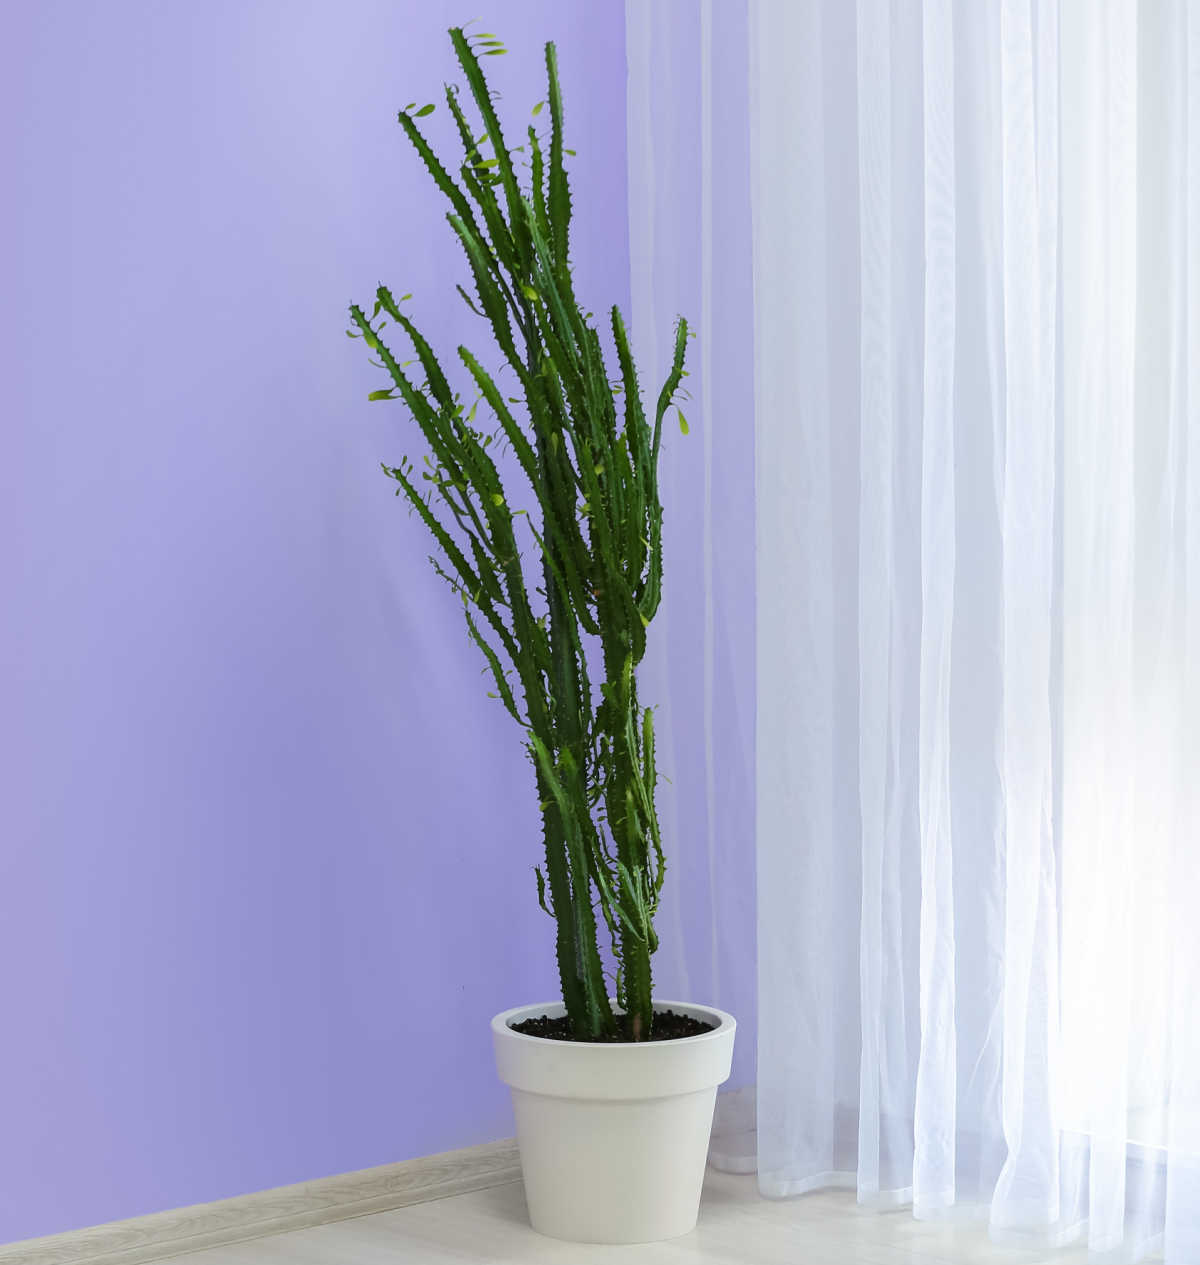  A tall succulent in a white pot near a window.